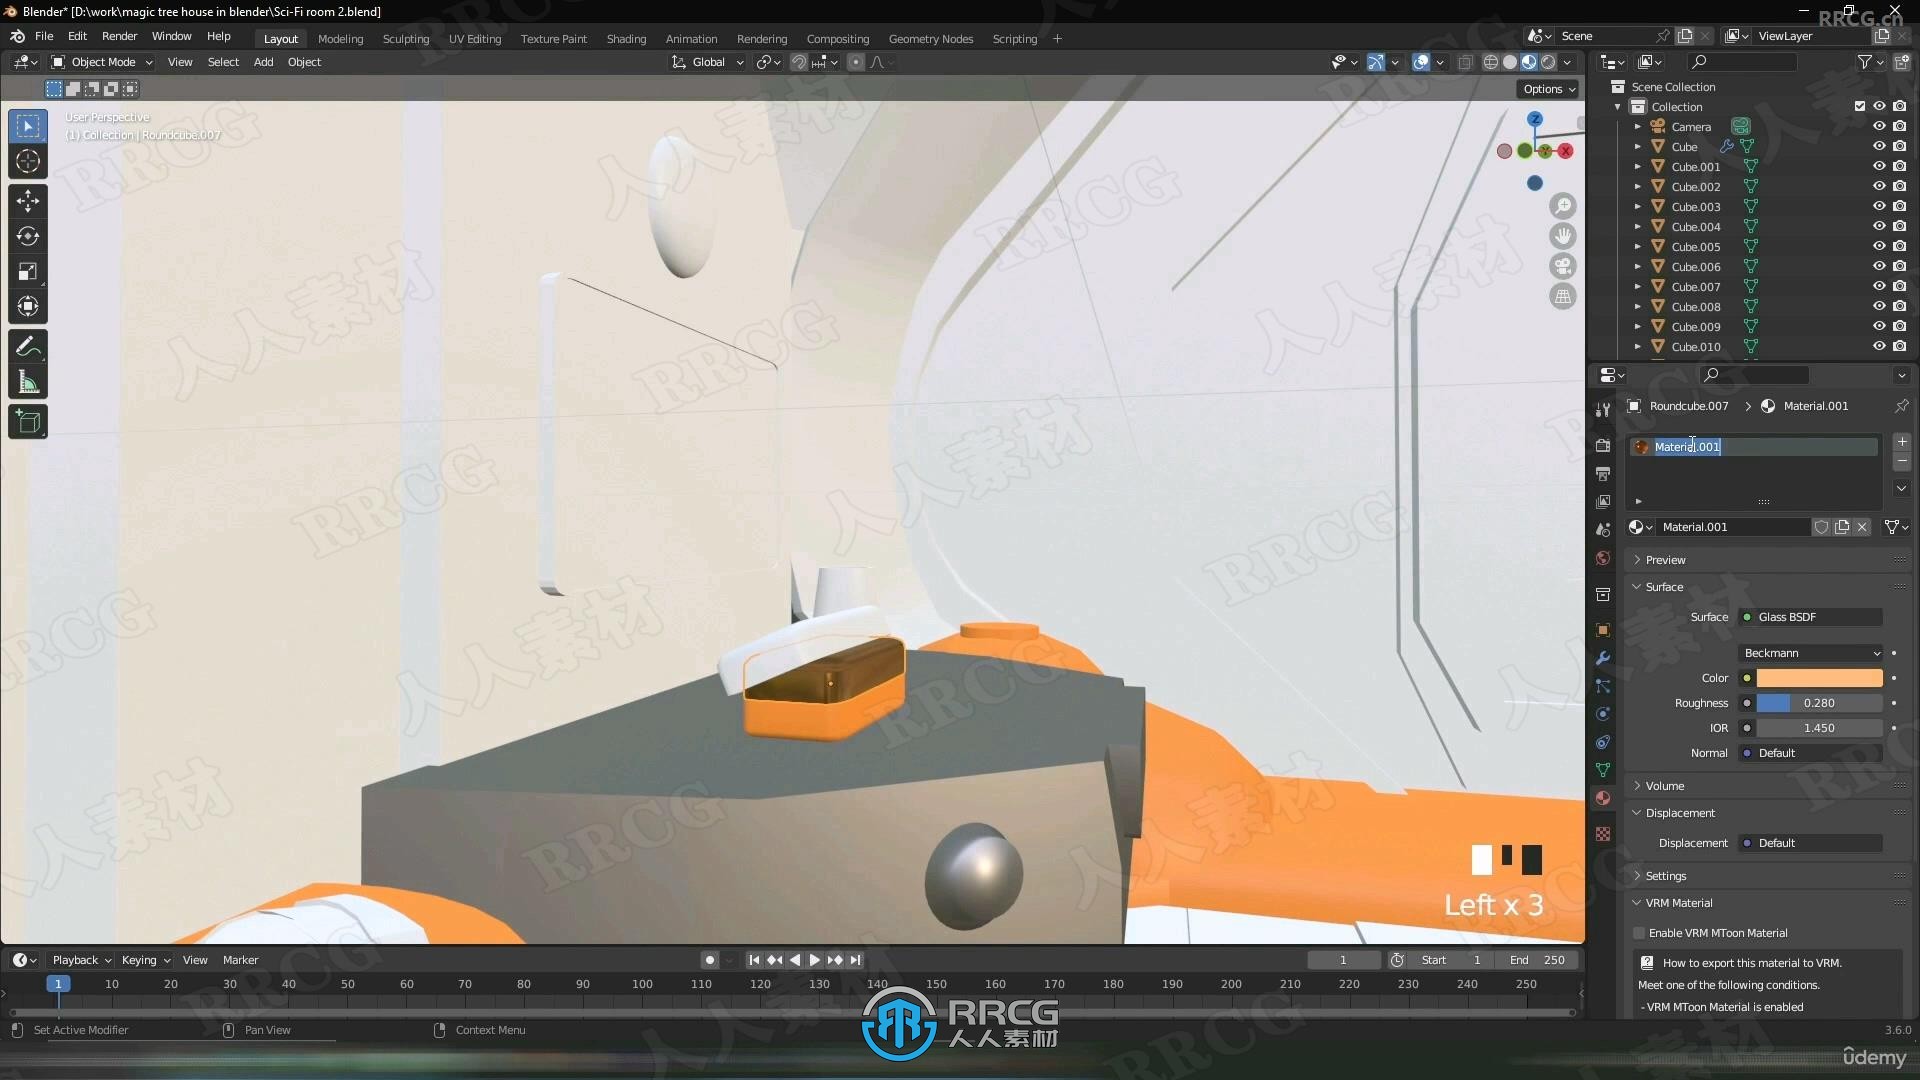 Blender未来科幻房间环境场景制作视频教程